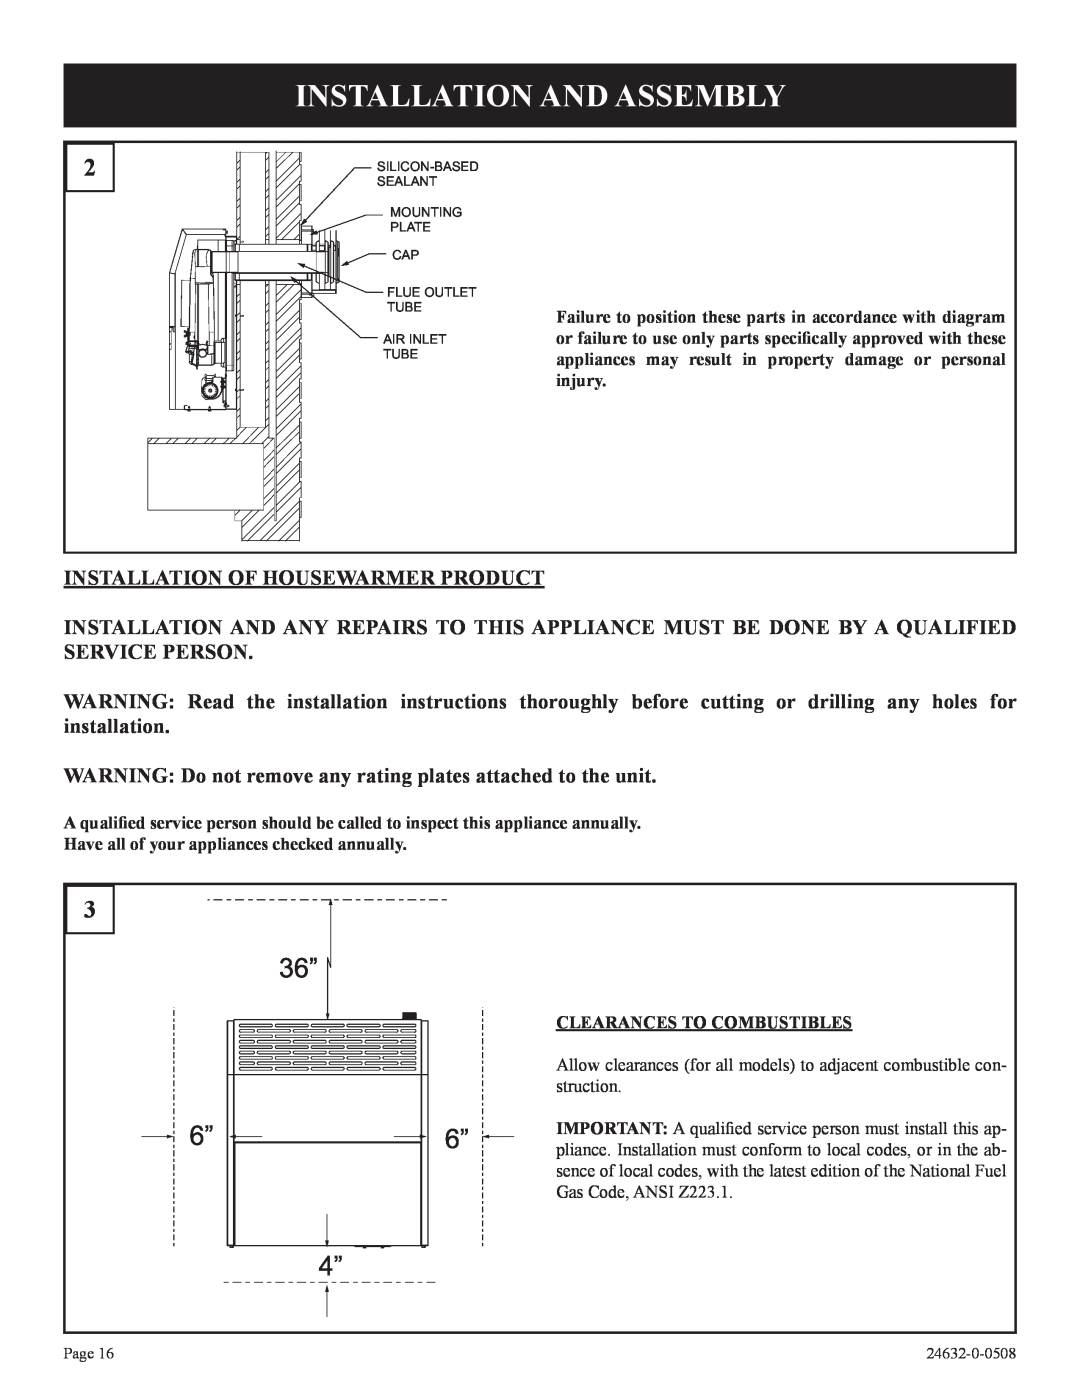 Epson HWDV080DV(N, P)-1 installation instructions Installation And Assembly, Installation Of Housewarmer Product 